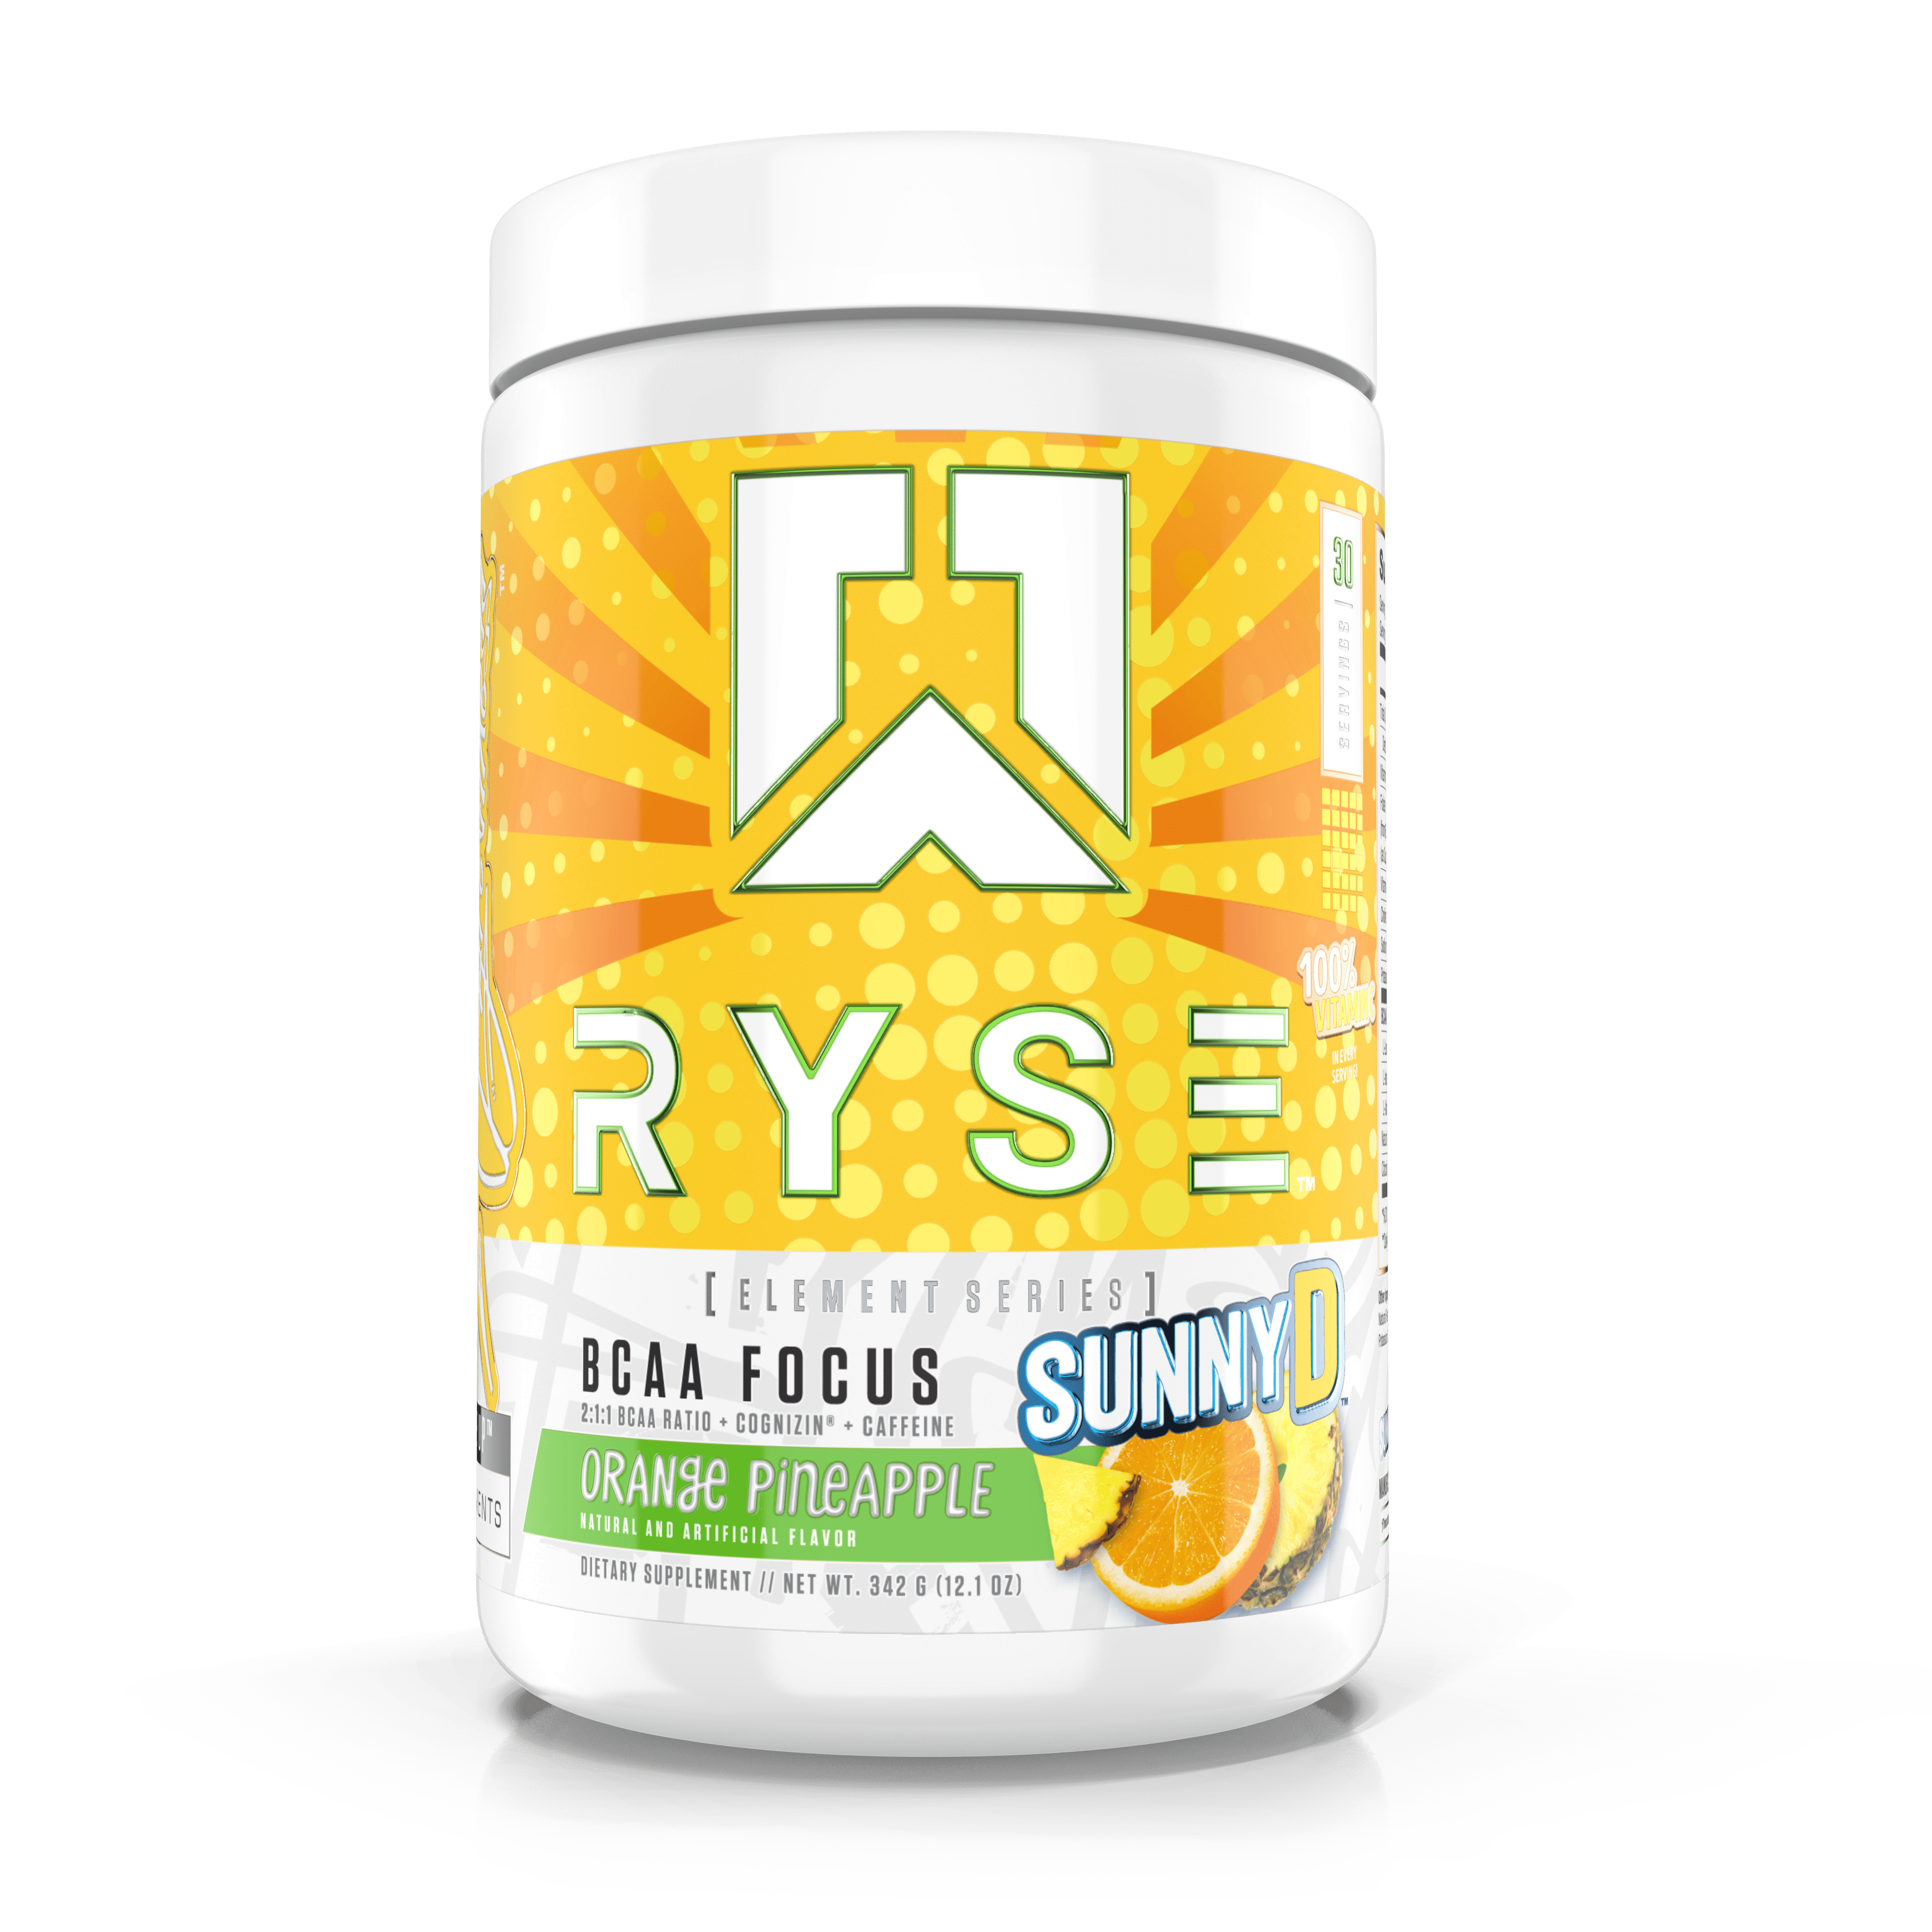 RYSE Element Series, BCAA Focus Intra Post Workout Powder, SUNNYD Orange Pineapple, 30 Servings